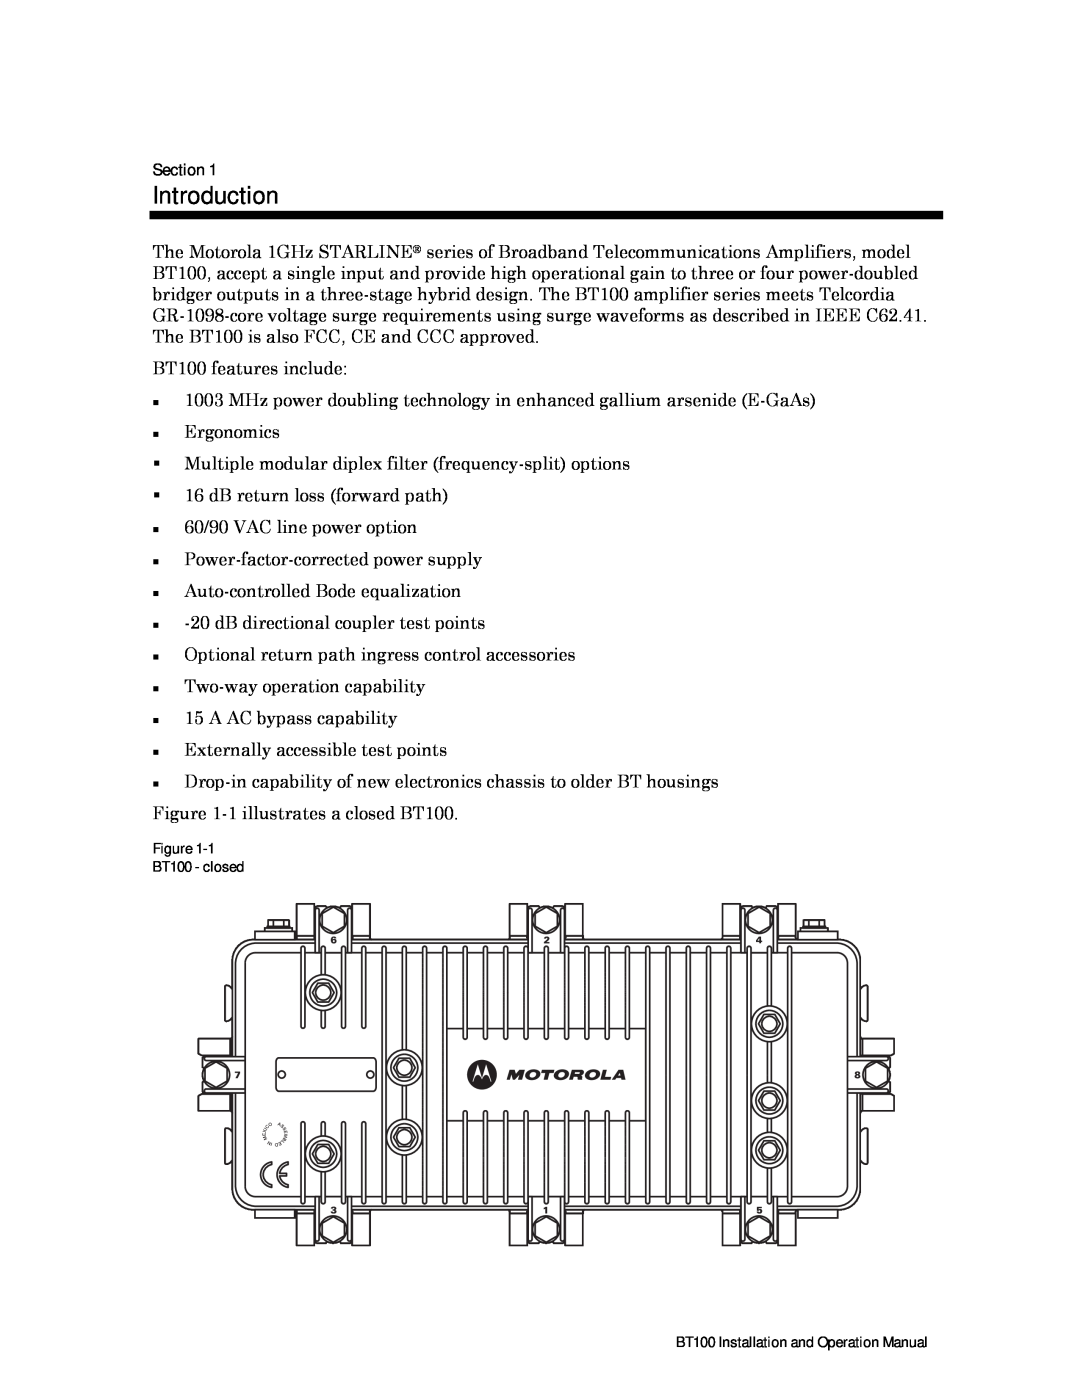 Motorola BT100 operation manual Introduction, Section 